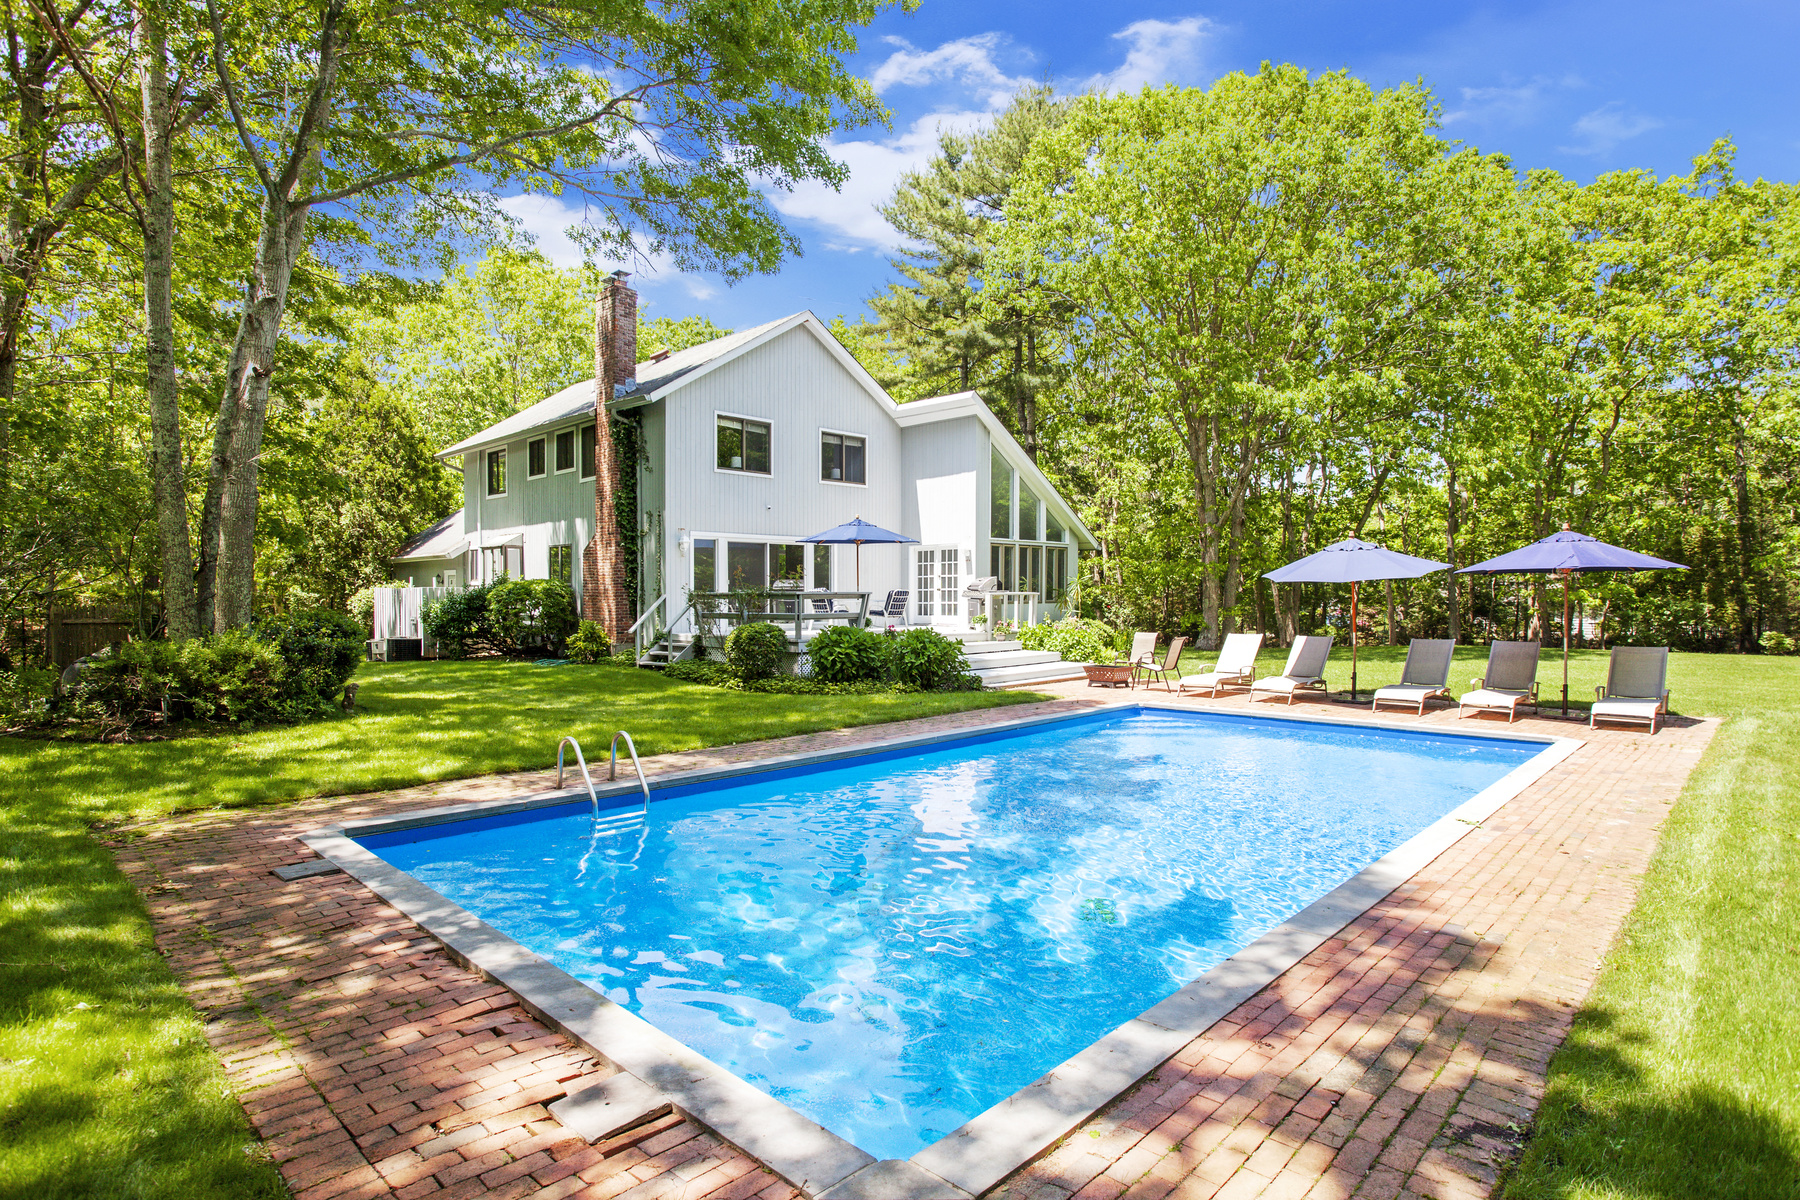 Rental Property at 468 Water Mill Towd Road, Southampton, Hamptons, NY - Bedrooms: 3 
Bathrooms: 2.5  - $30,000 MO.